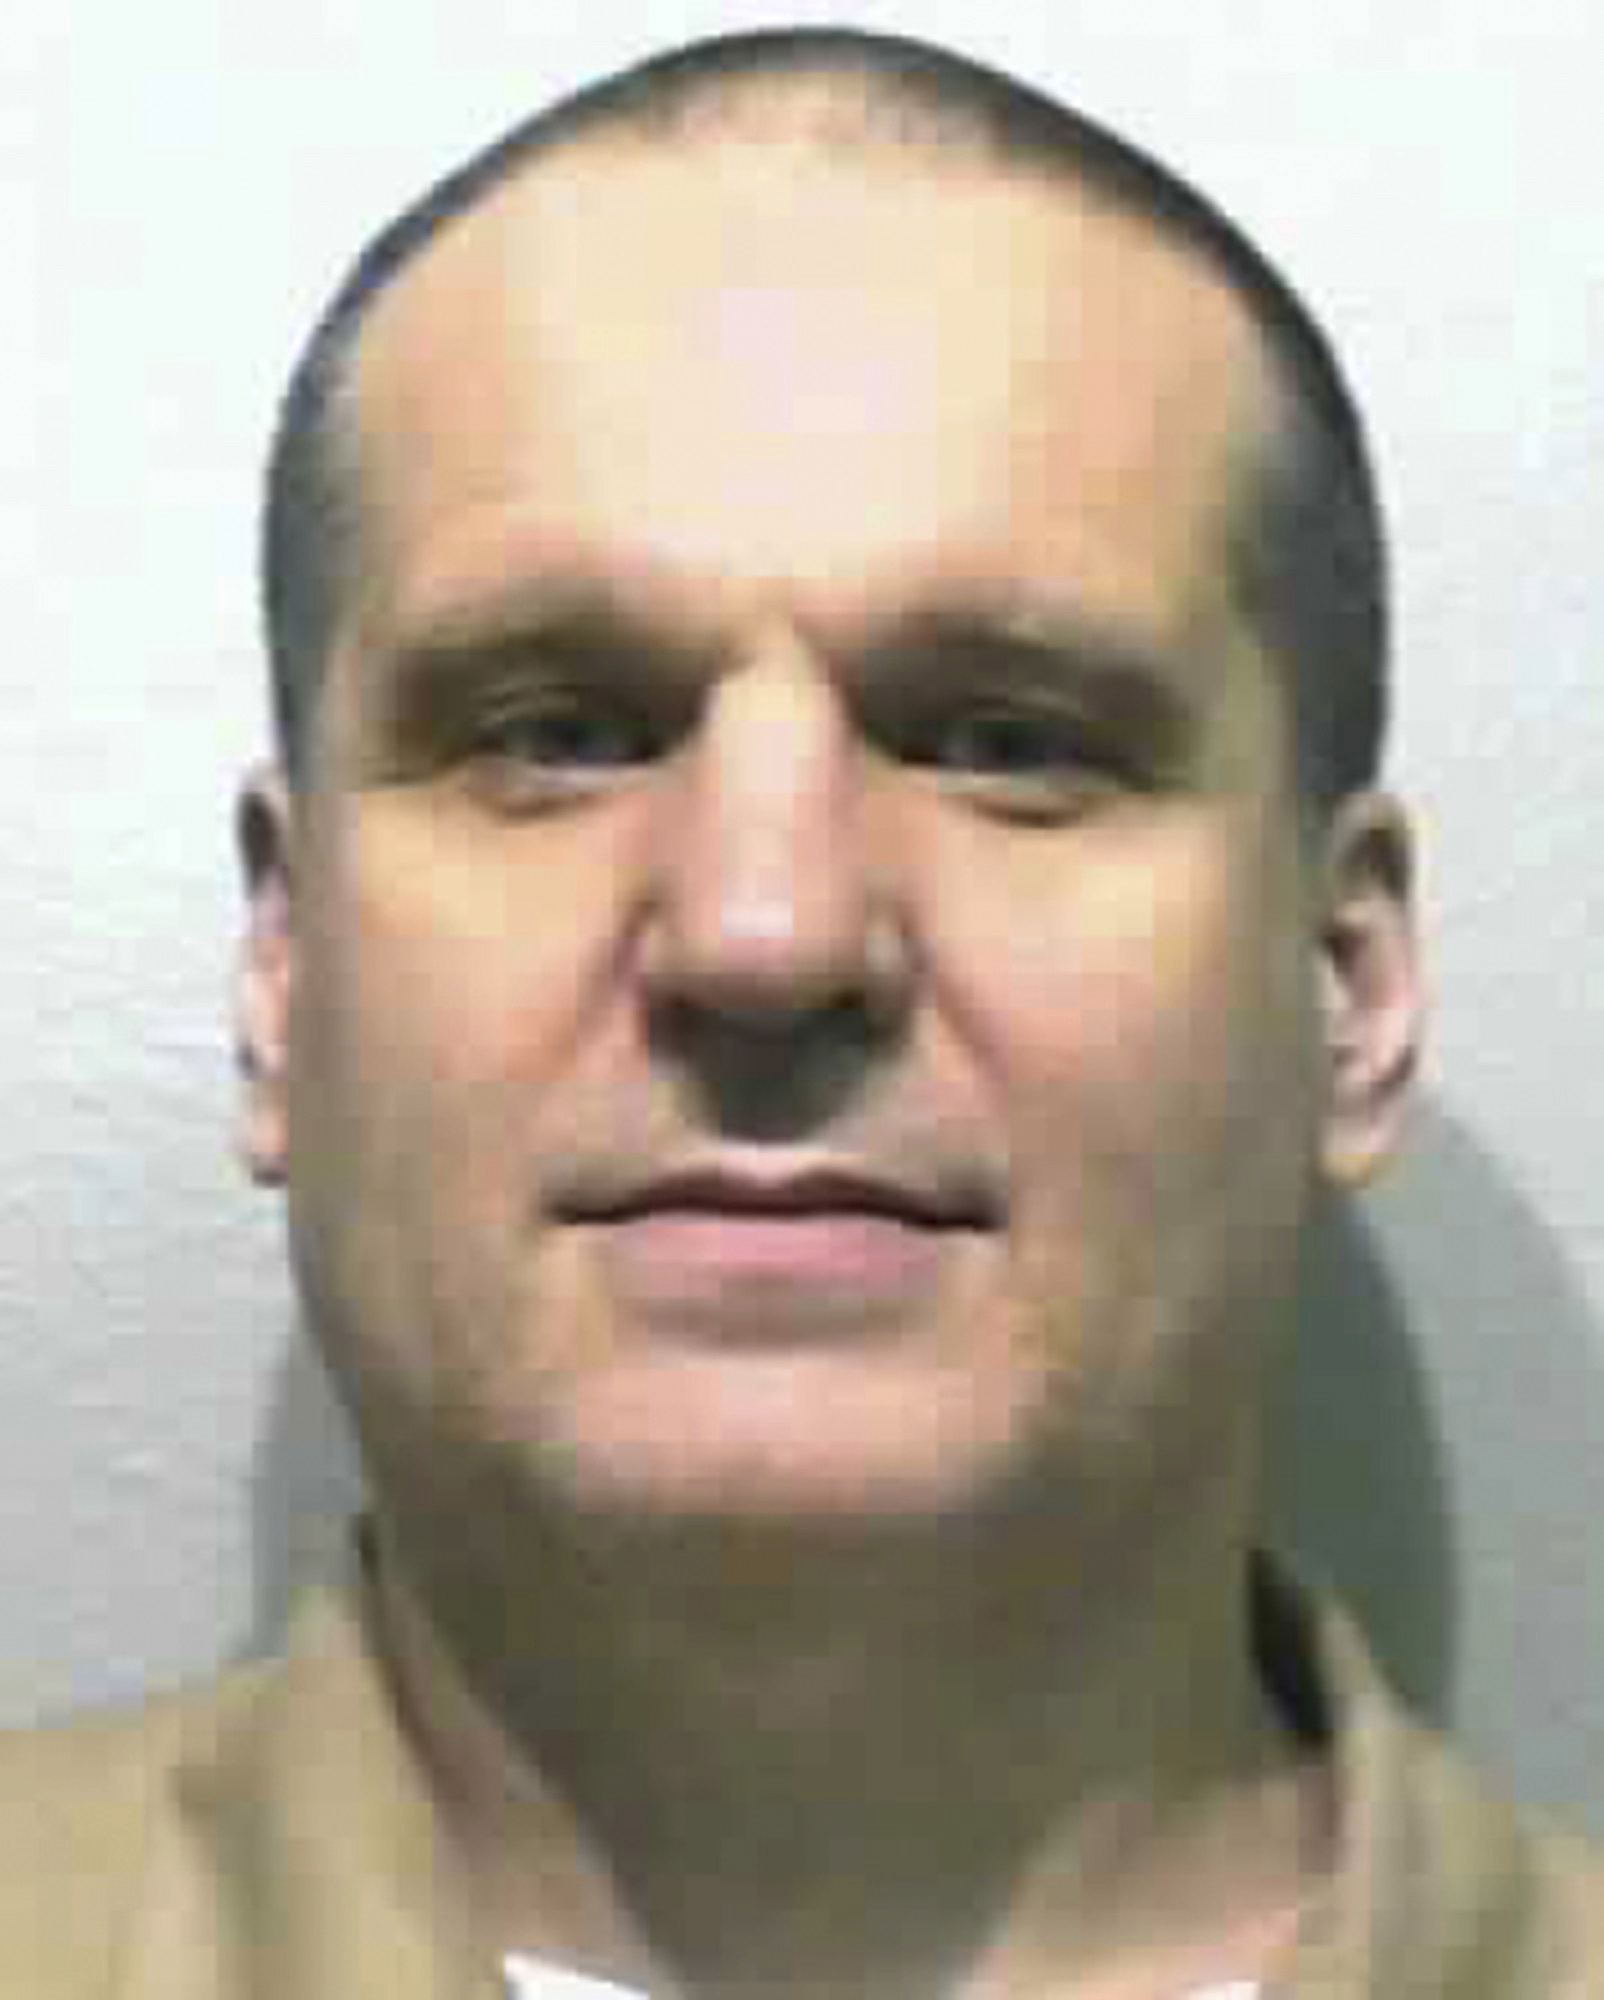 Byron Scherf
Sentenced to death Wednesday